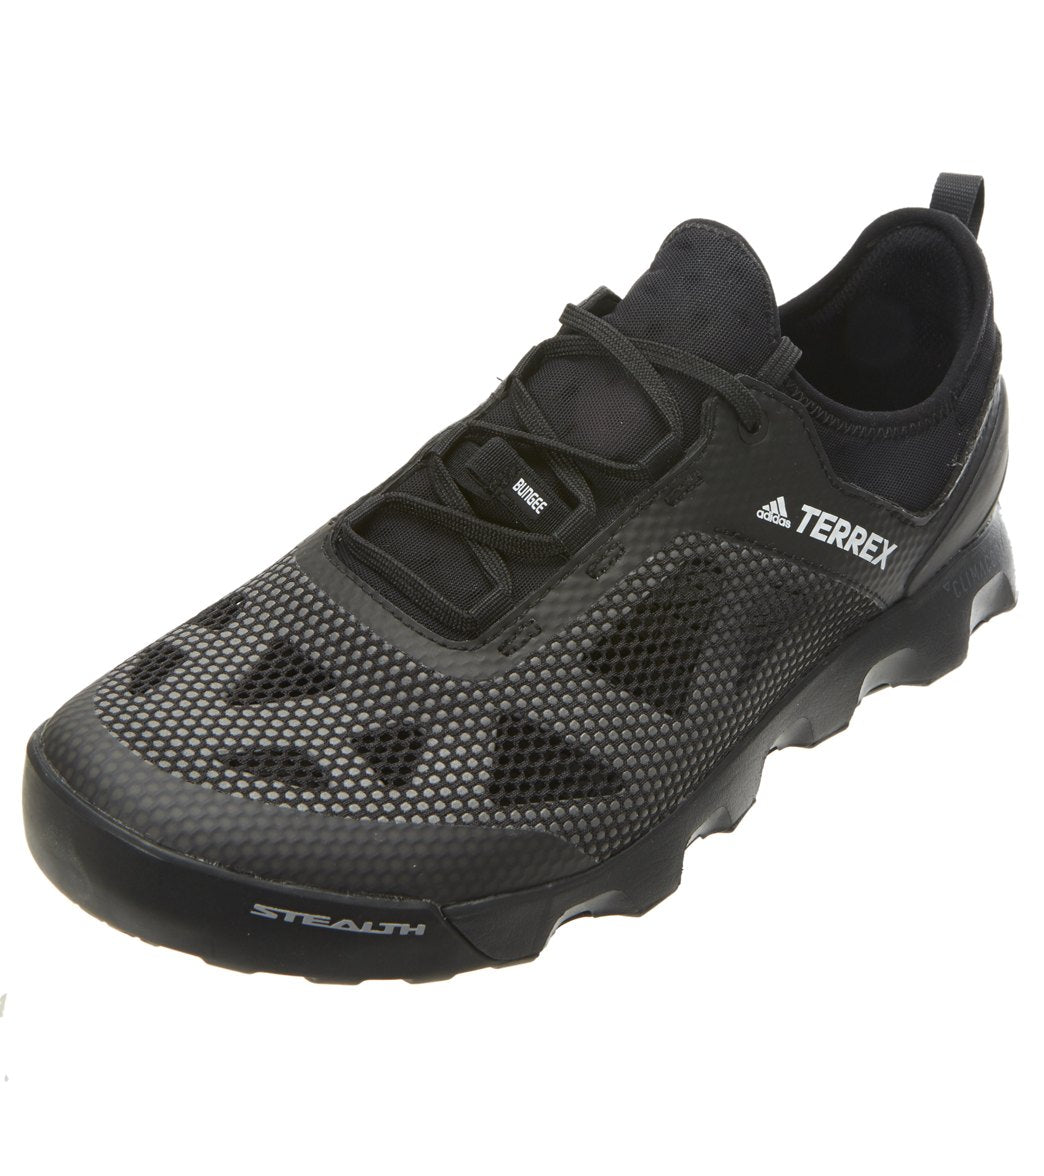 Adidas Men's Terrex Climacool Voyager Aqua Water Shoe at SwimOutlet.com